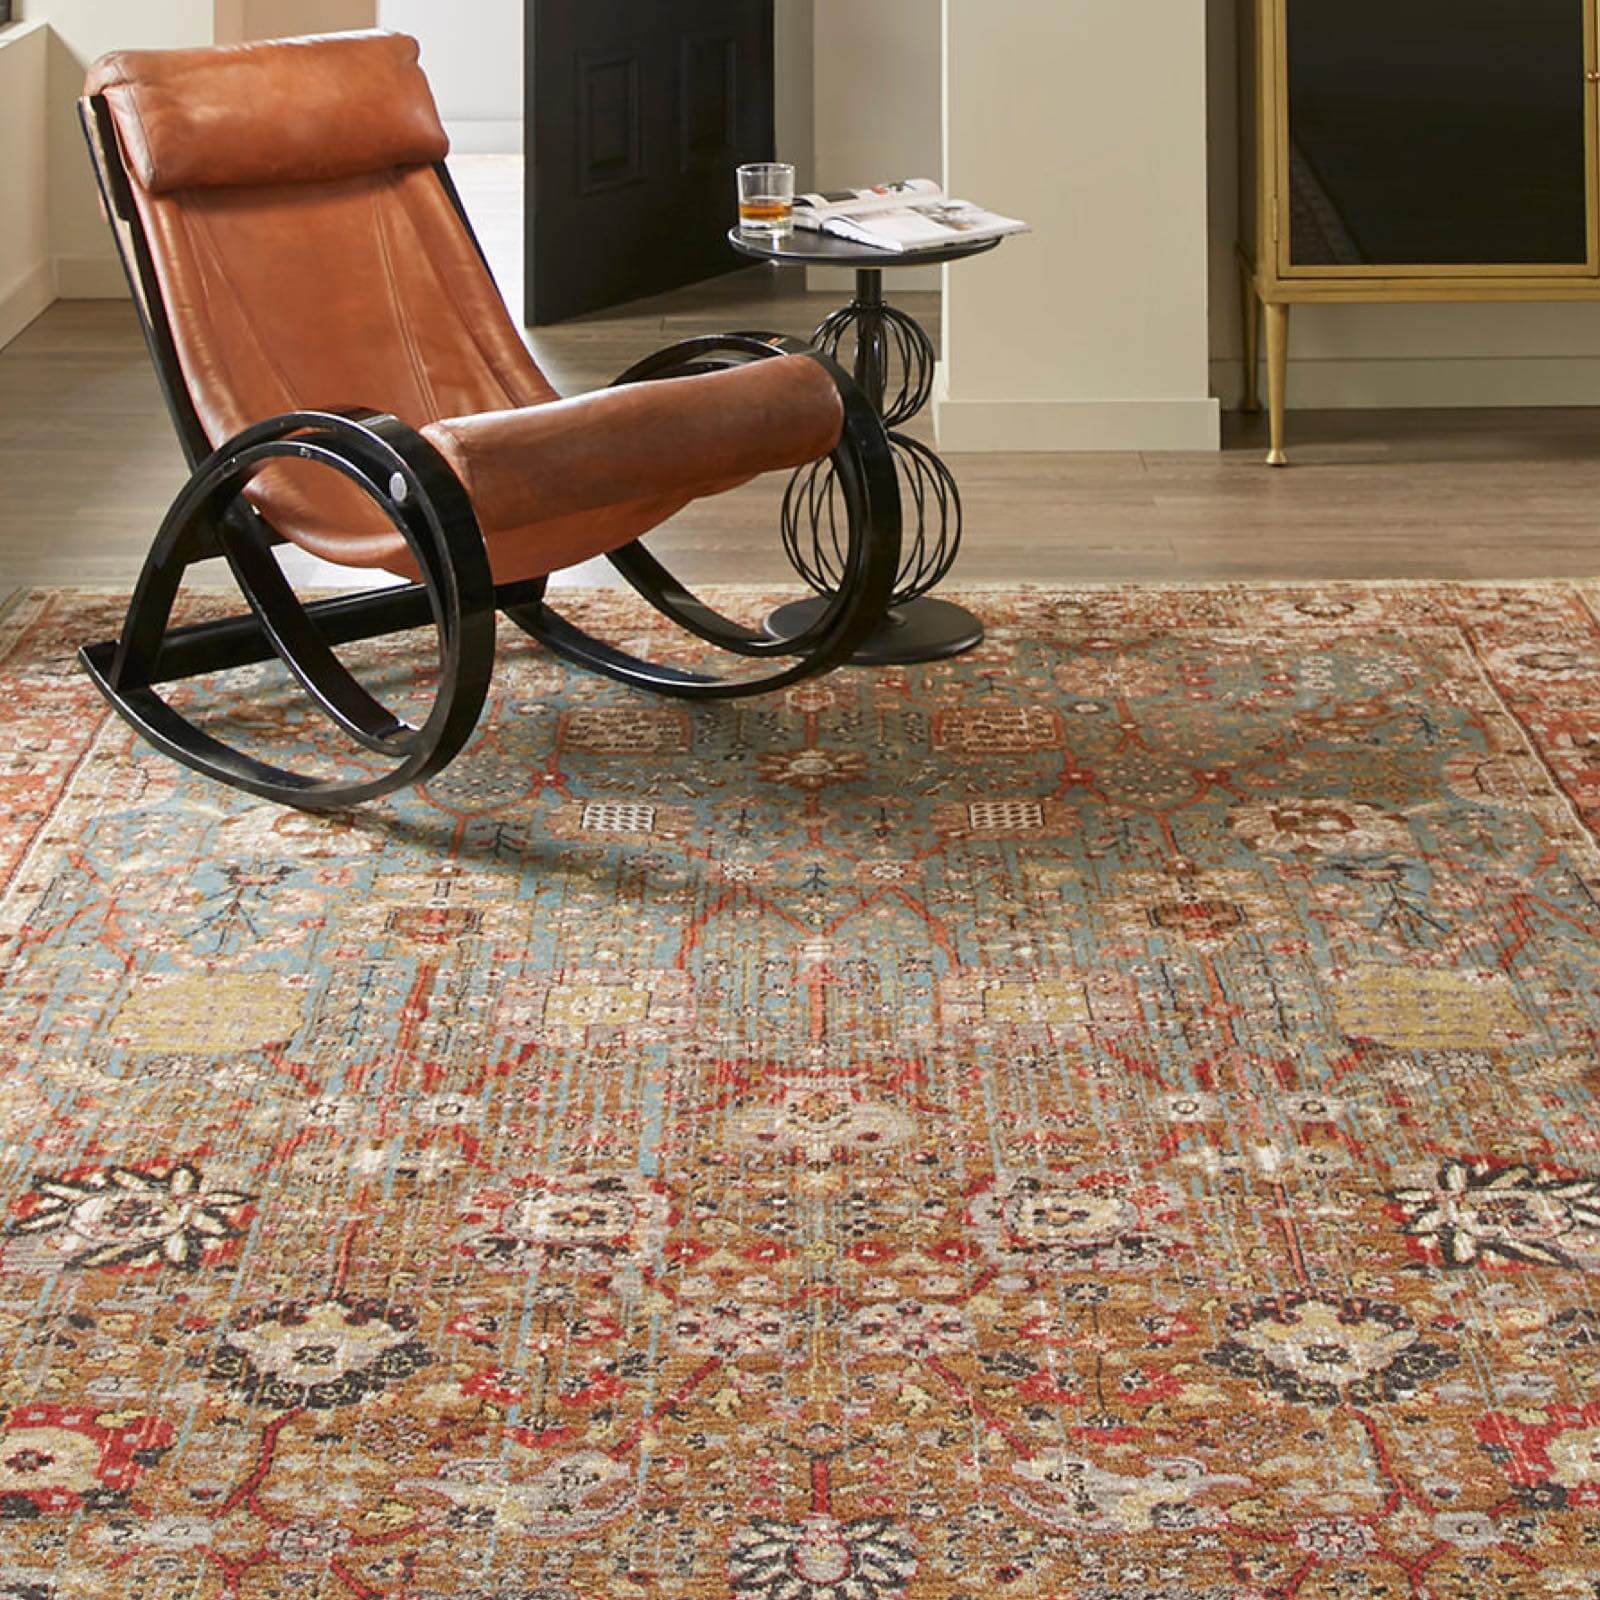 Area rug | Kelly's Carpet Omaha | Omaha, NE